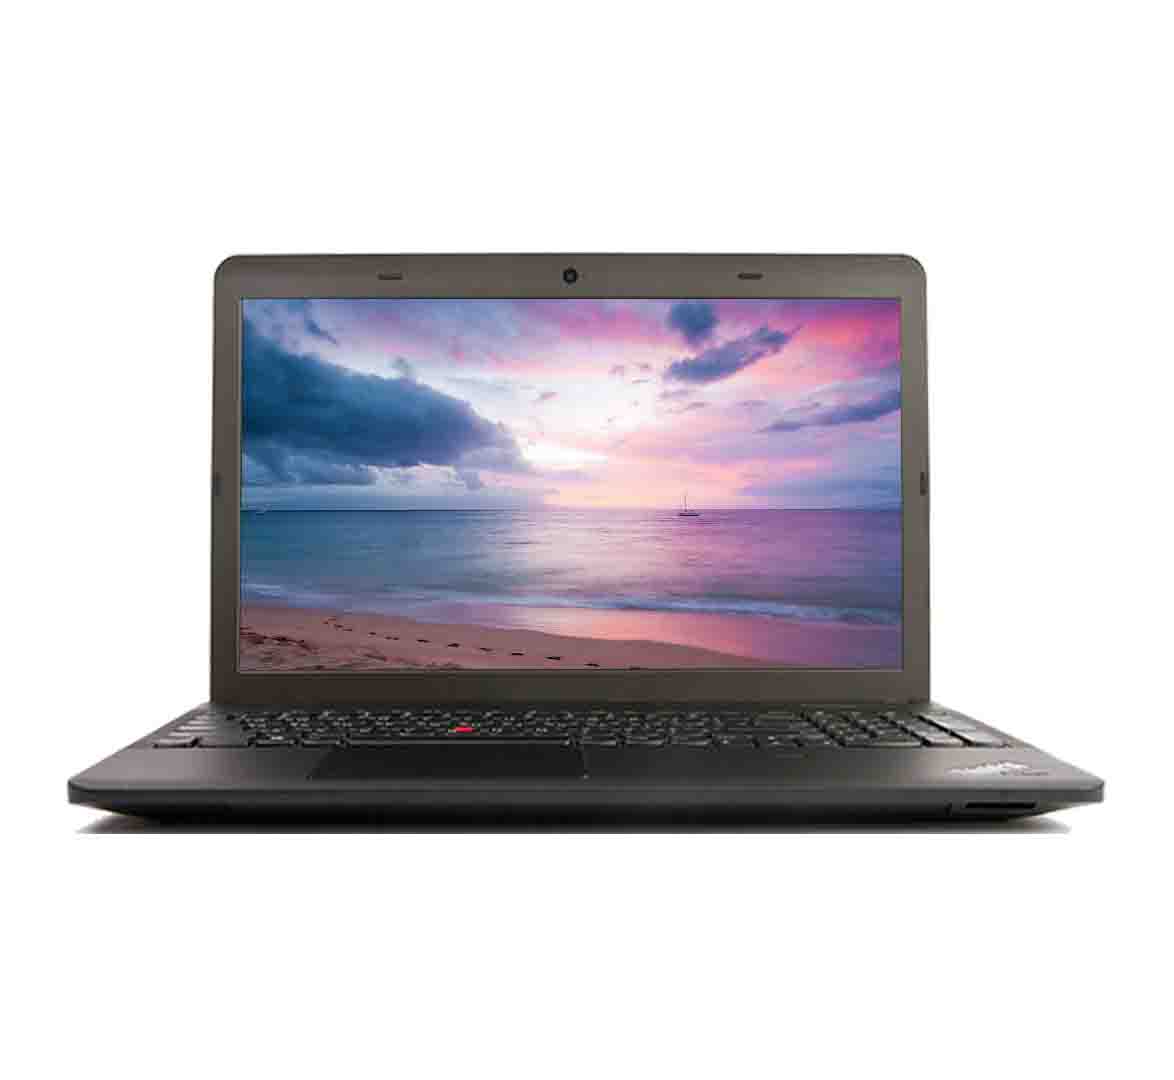 Lenovo ThinkPad E531 Business Laptop, Intel Core i5-3rd Generation CPU, 8GB RAM, 256GB SSD, 15.6 inch Display, Windows 10 Pro, Refurbished Laptop